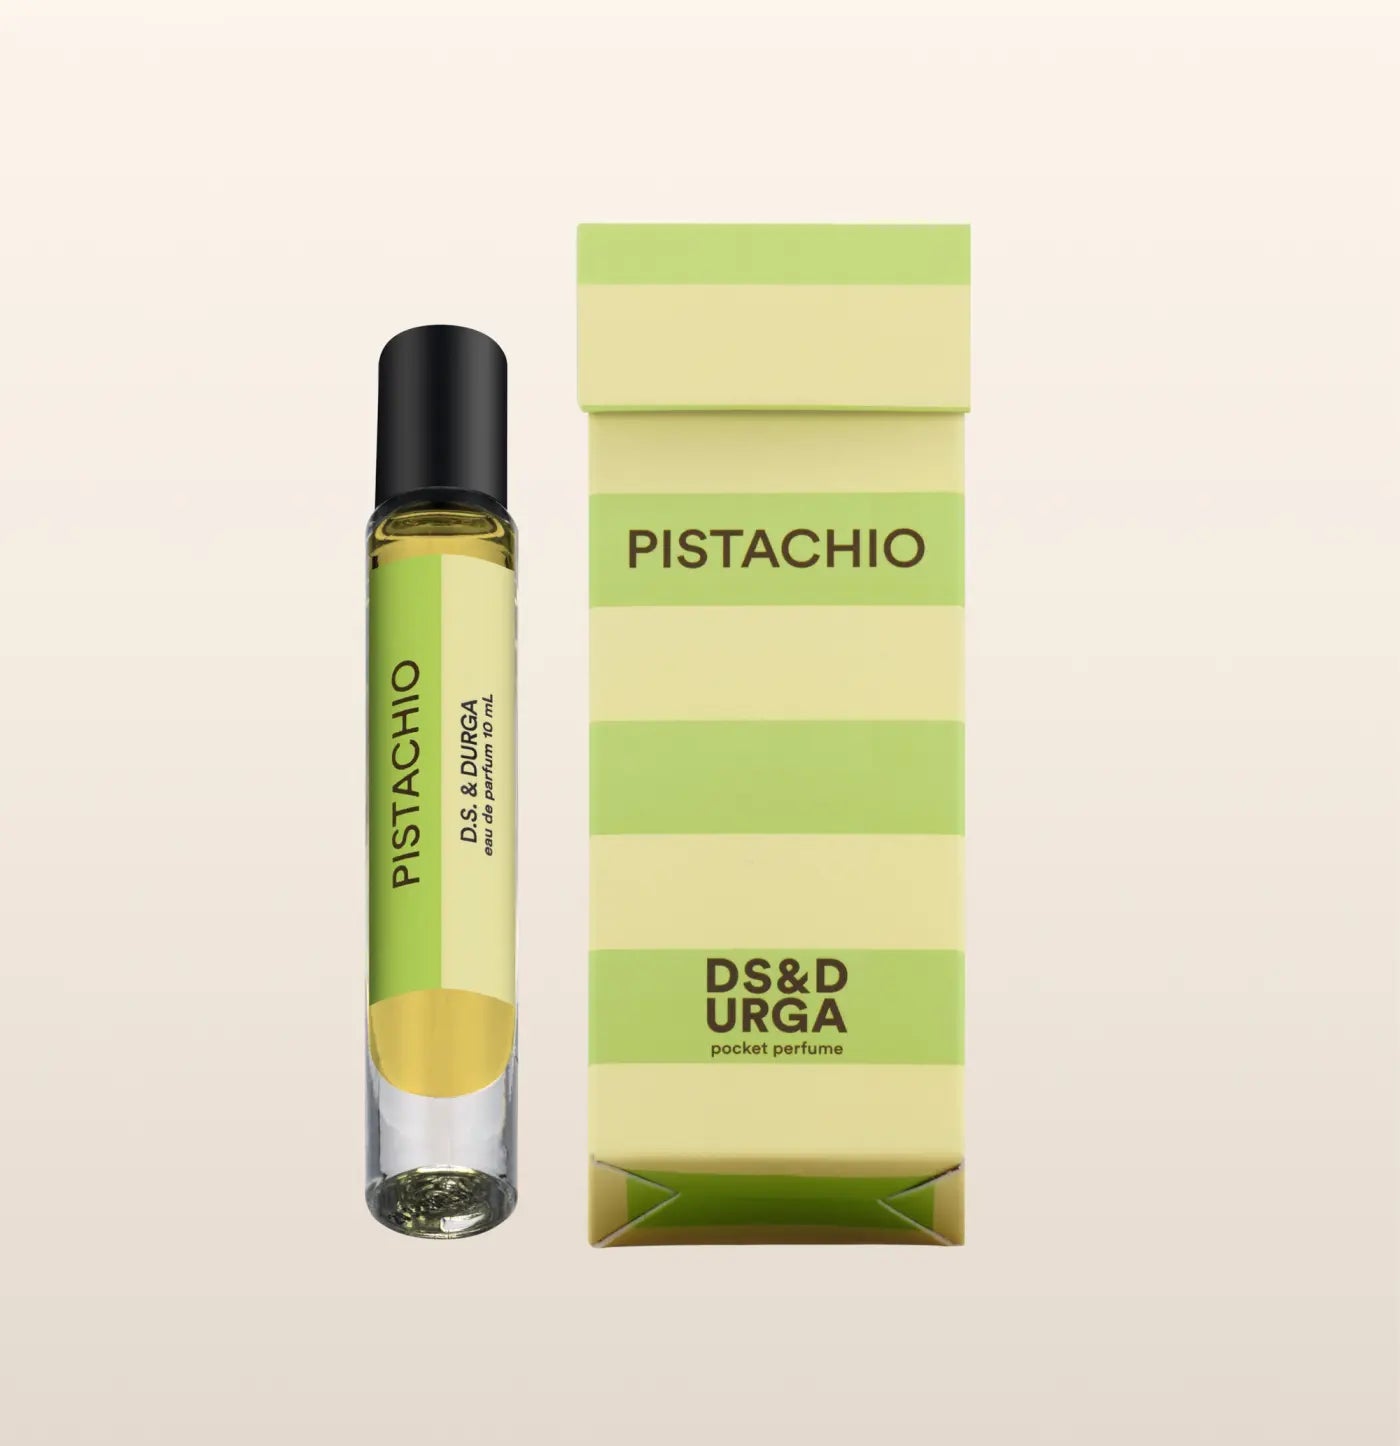 Pistachio Pocket Perfume